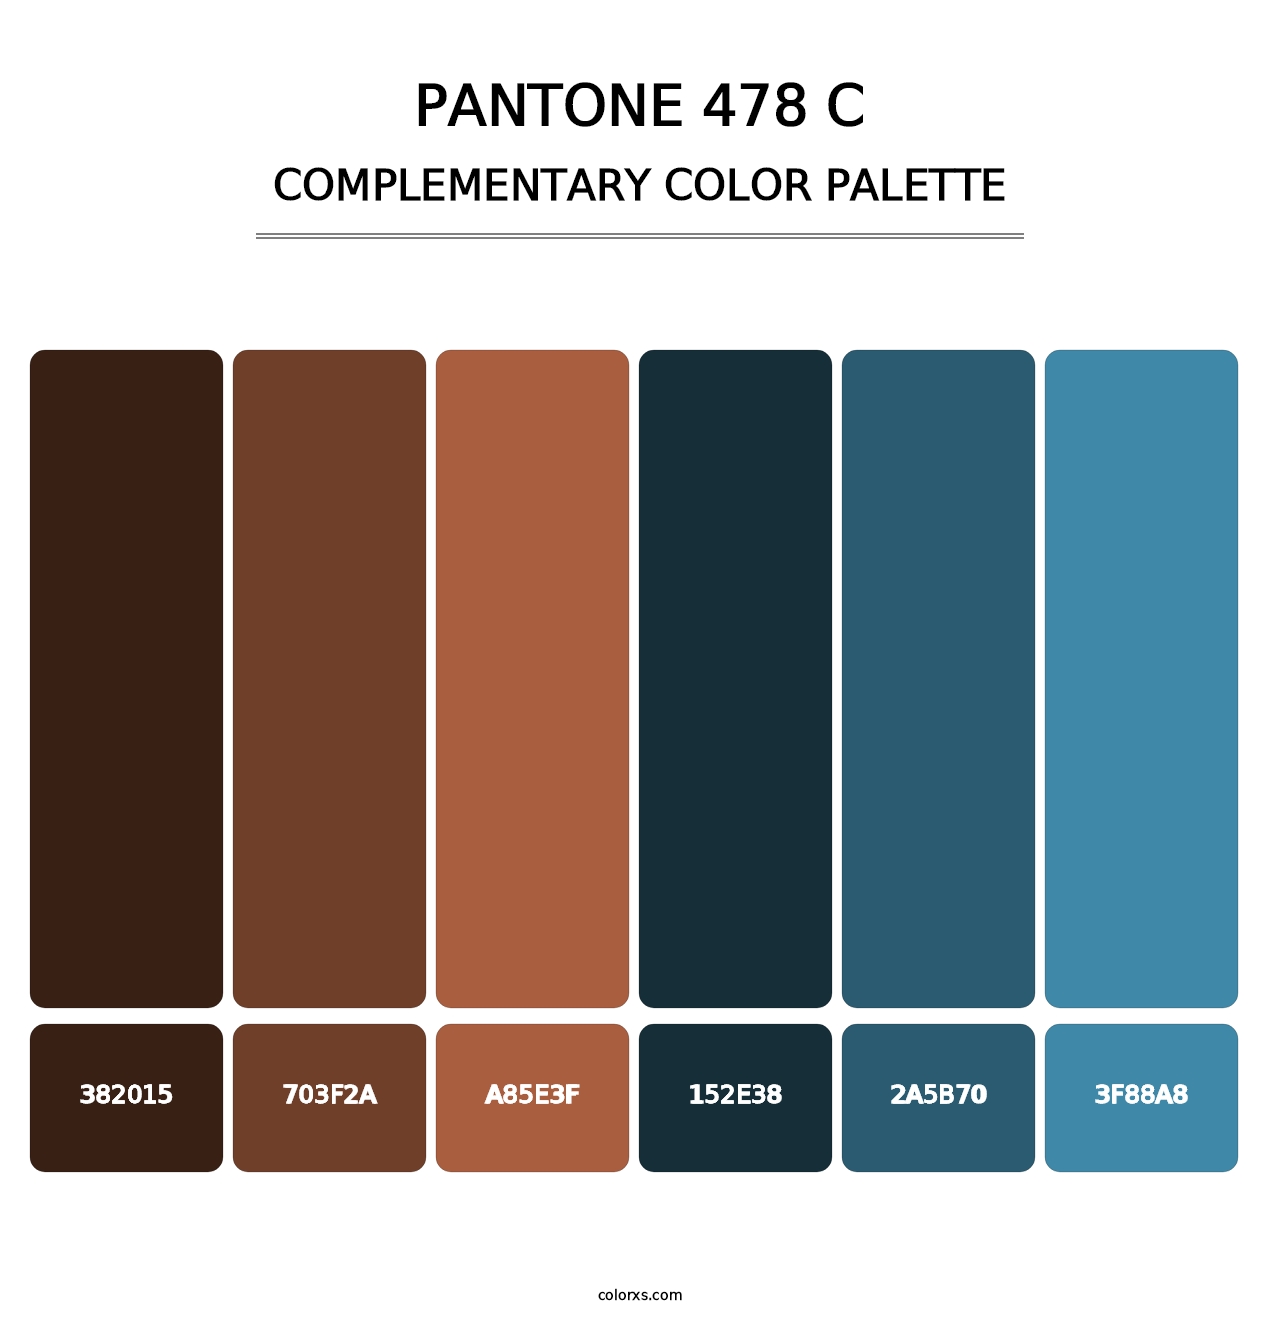 PANTONE 478 C - Complementary Color Palette